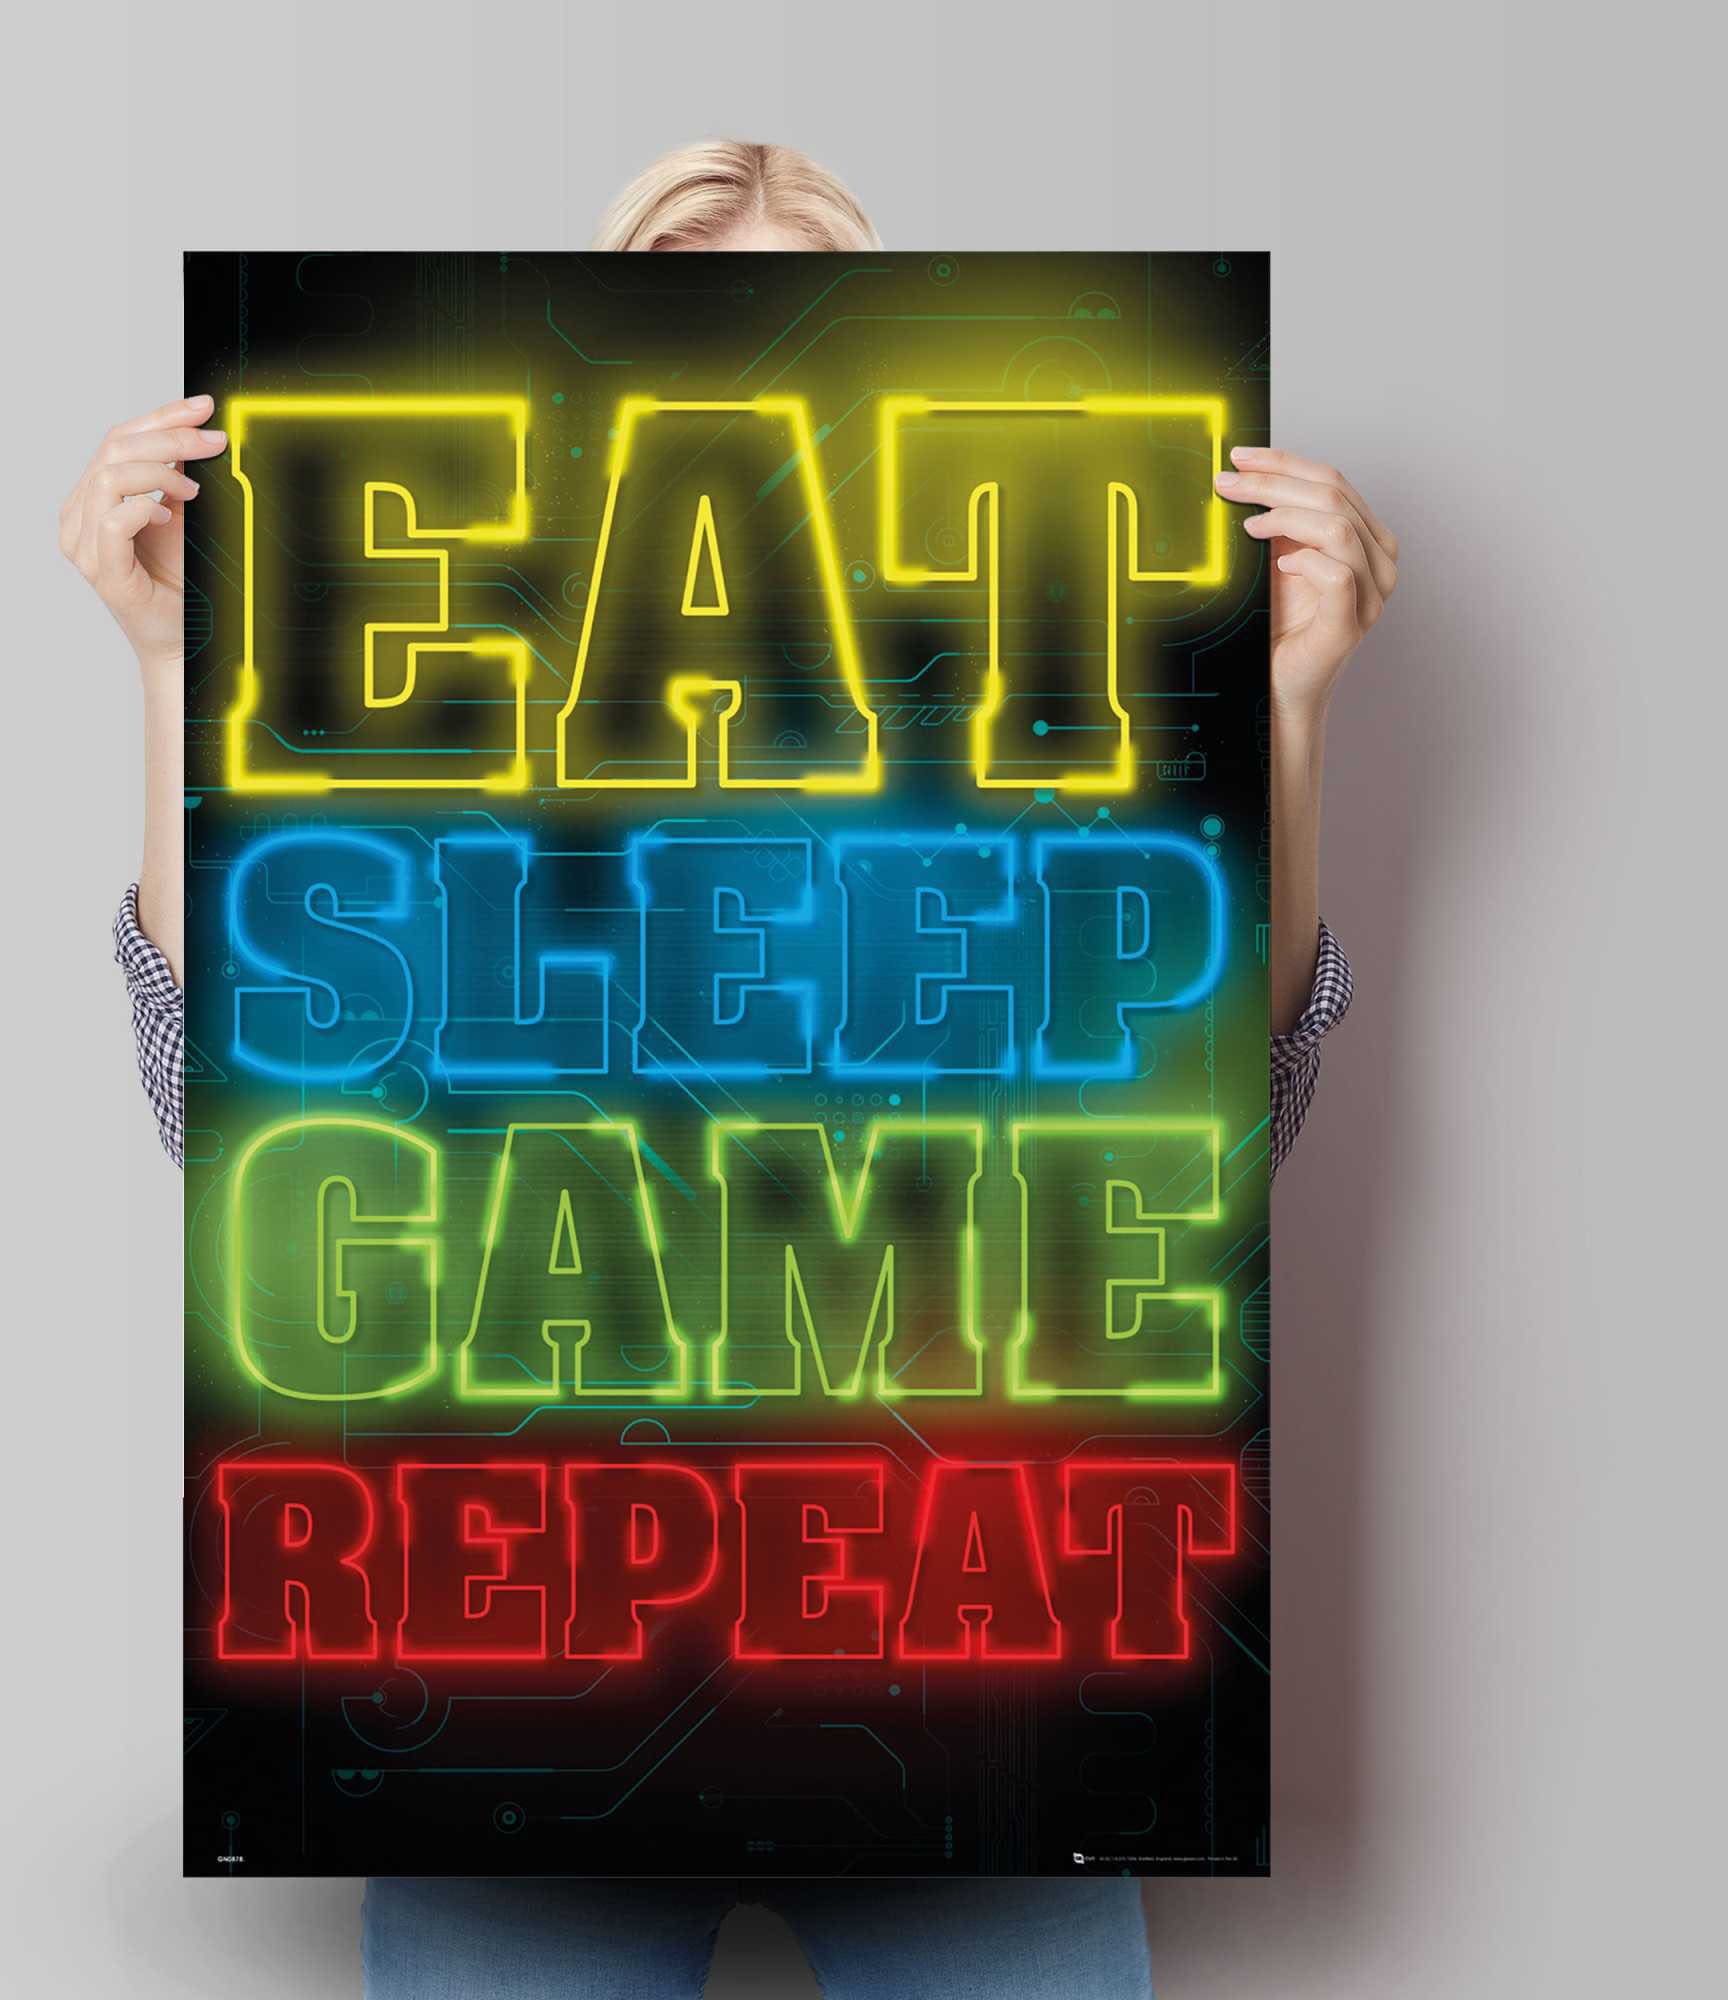 Zocken Reinders! Raten St.) Spiele, game sleep bestellen »Poster Eat (1 repeat«, Poster auf